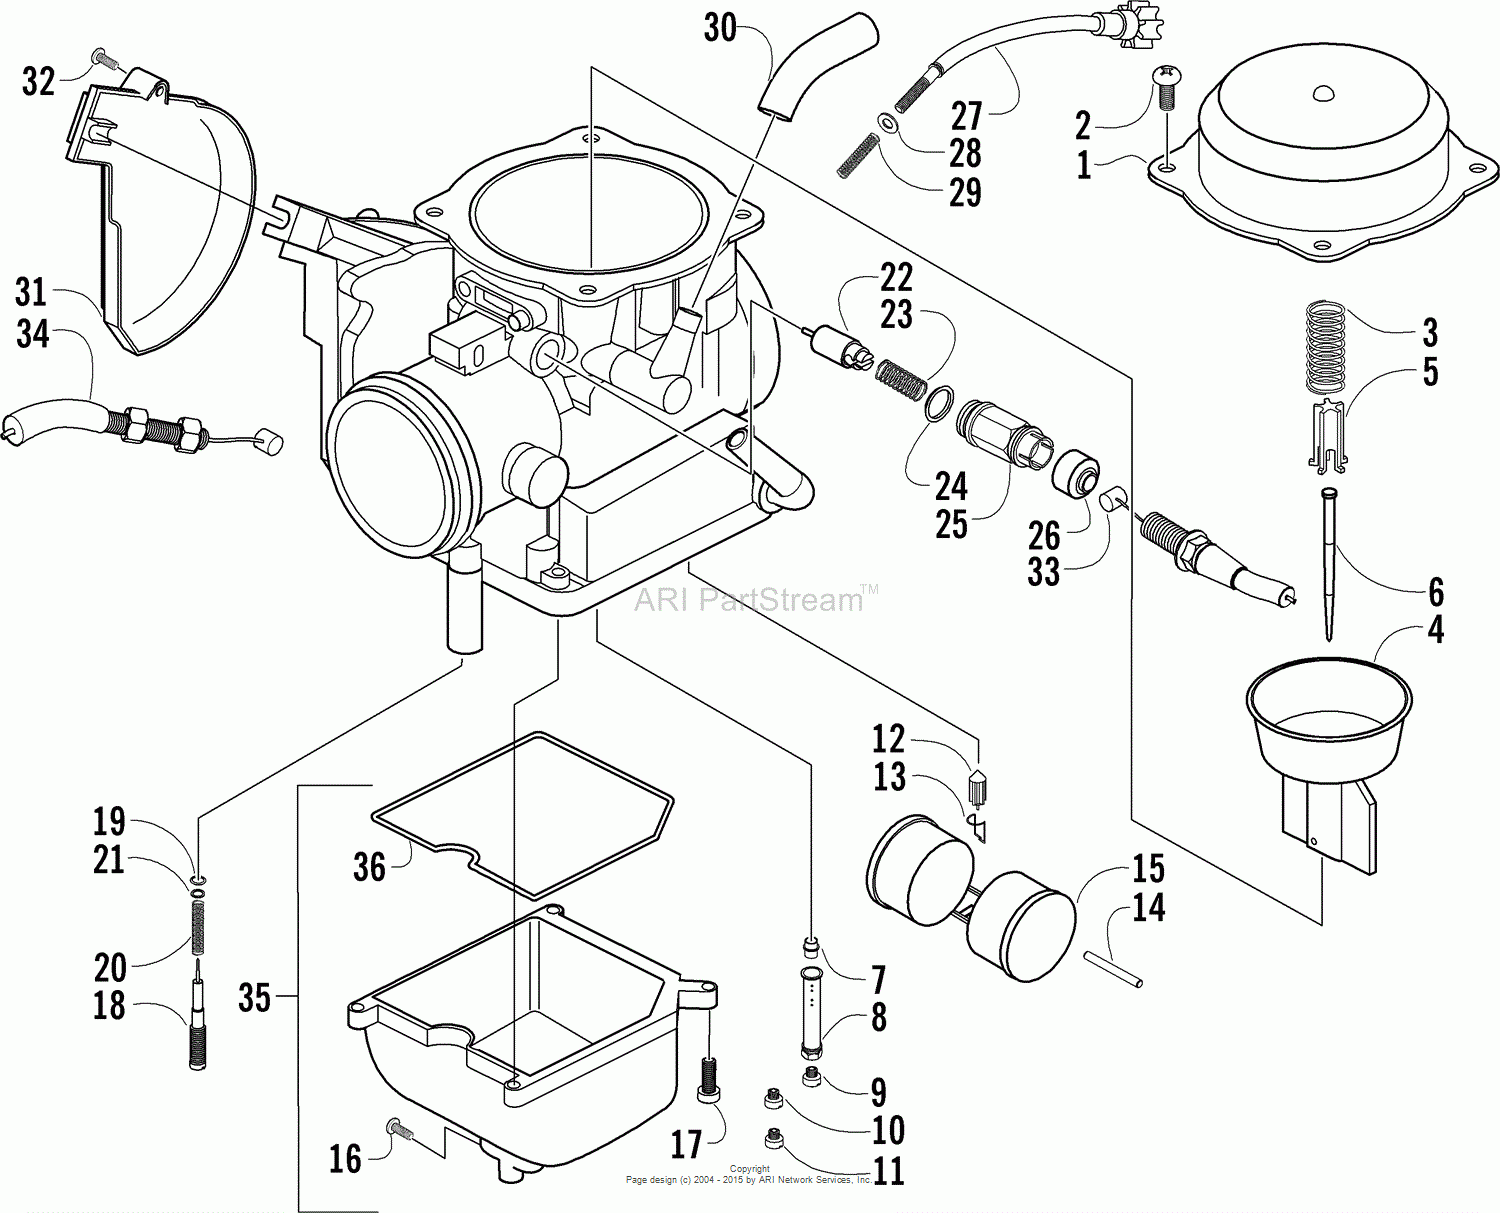 Honda Fat Cat Wiring Diagram